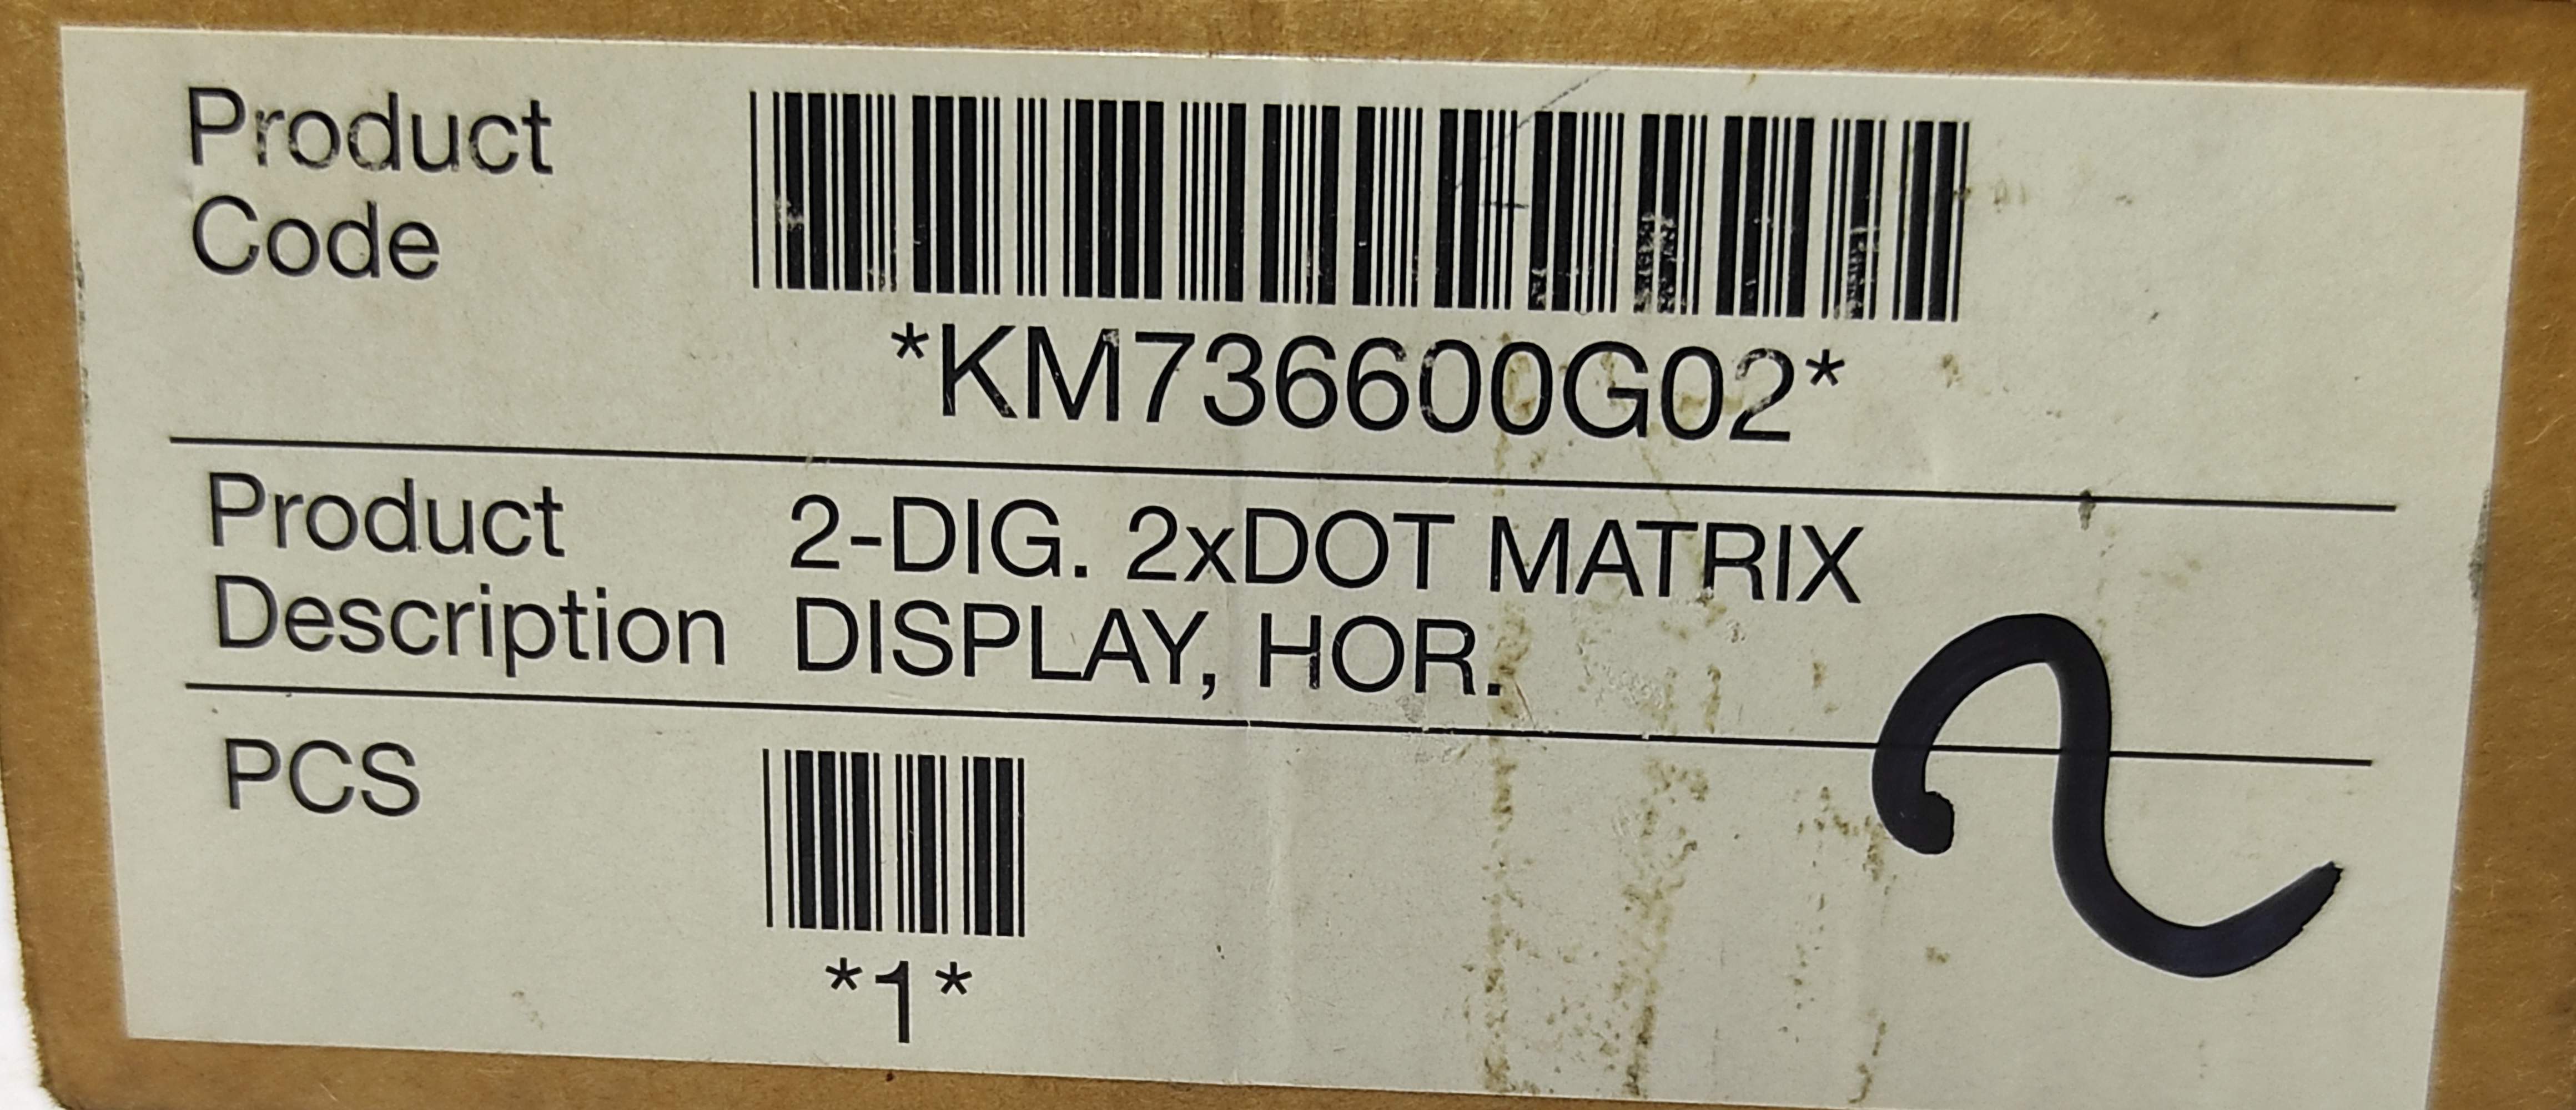 Kone KM736600G02 2-Dig 2xDot Matrix Display Horizontal